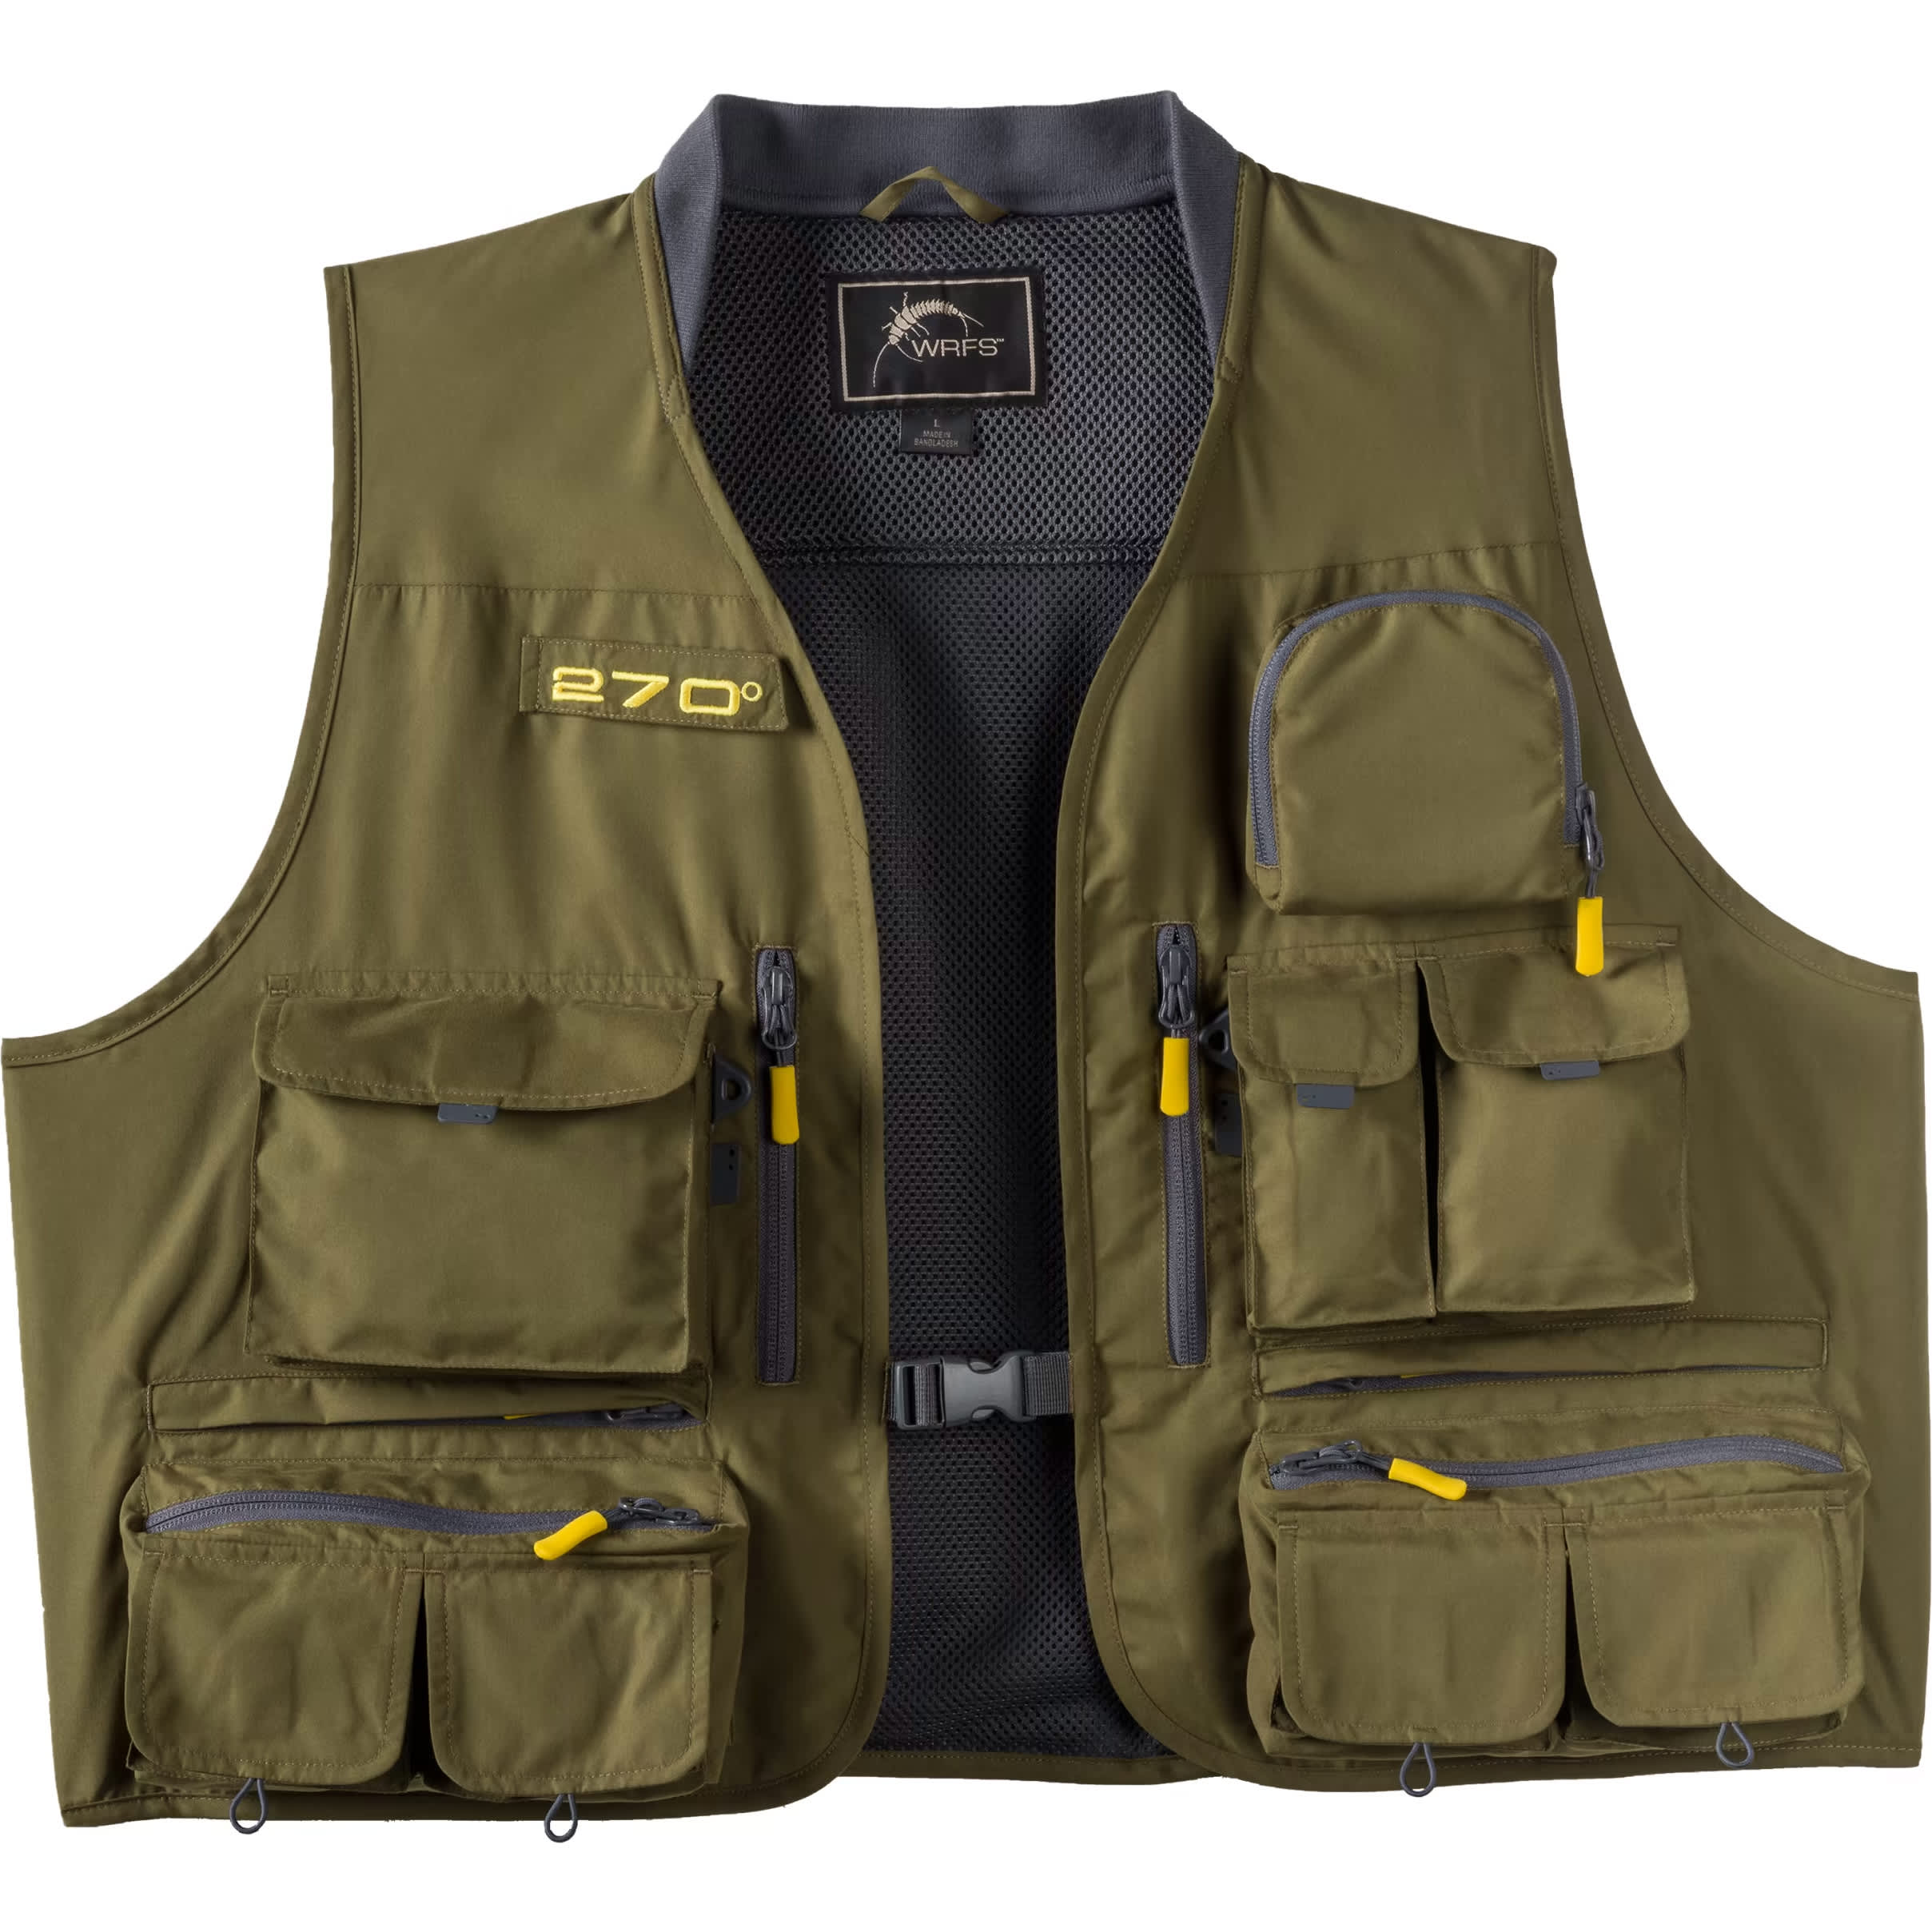 Bass Pro Shops Tournament Mesh Fishing Life Vest Size XXL 2XL Model 1800  beige